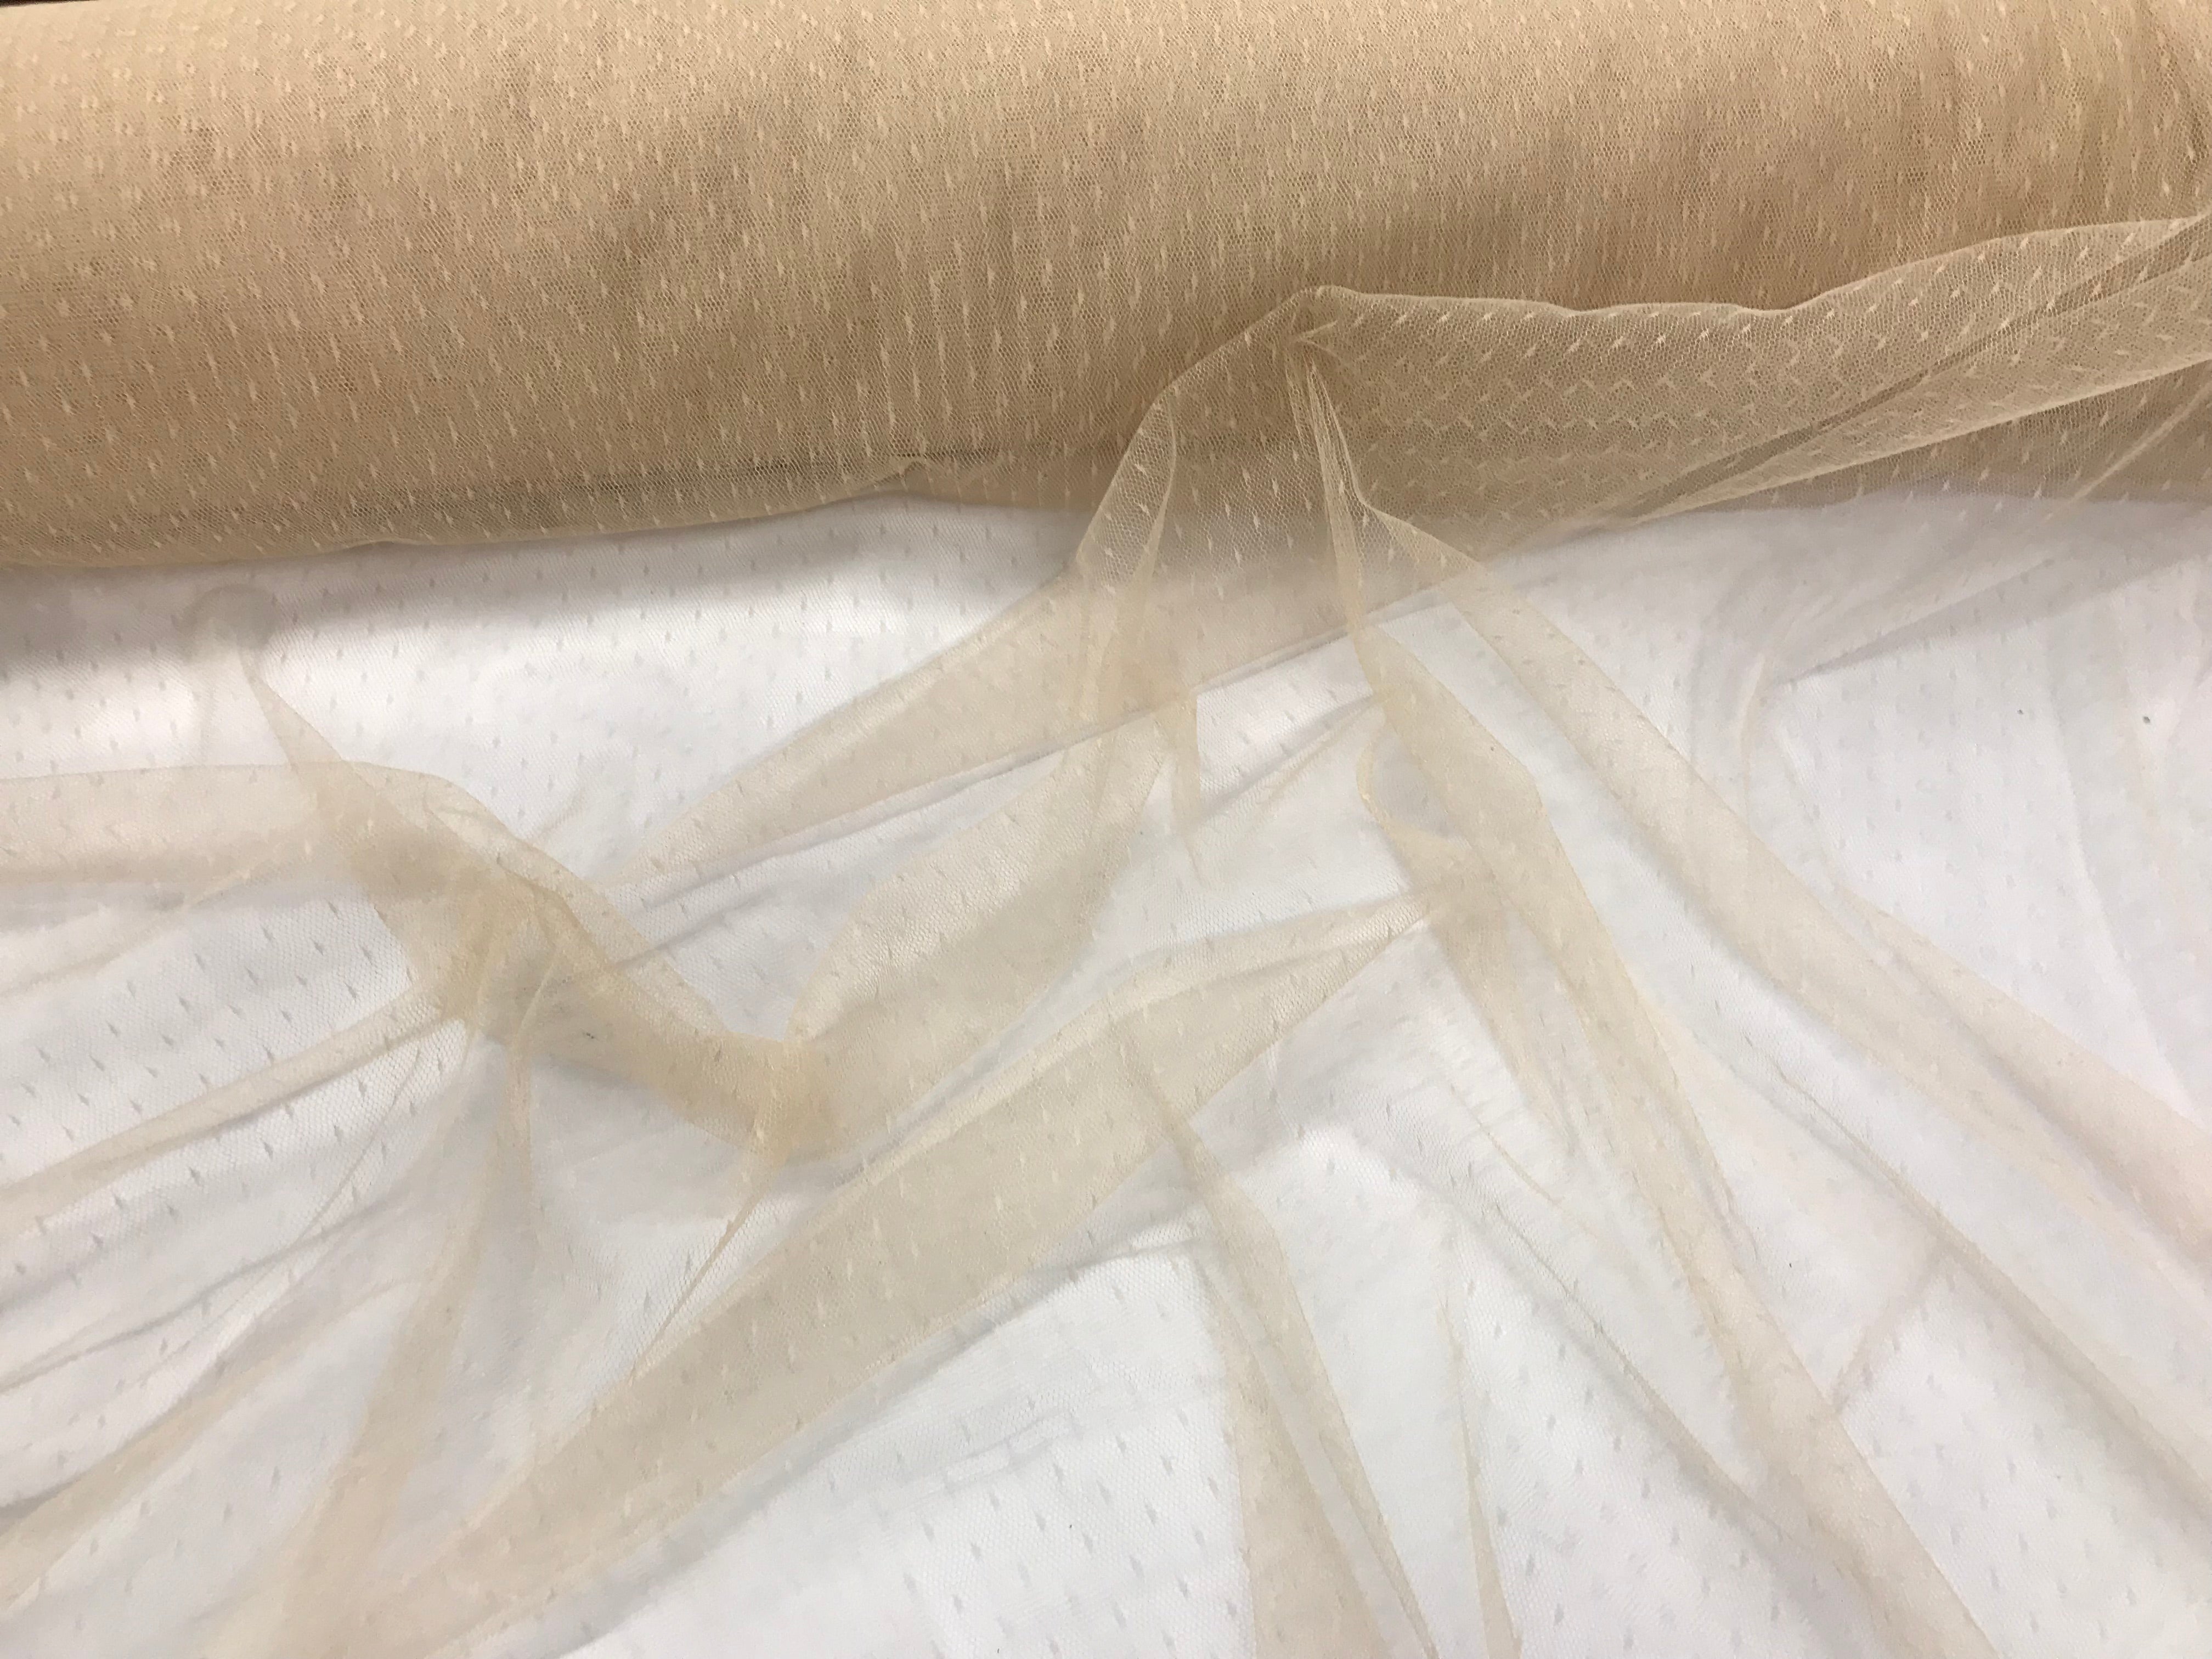 English Netting - Skin - Mesh Net Fabric For Bridal Veil & Wedding Dec